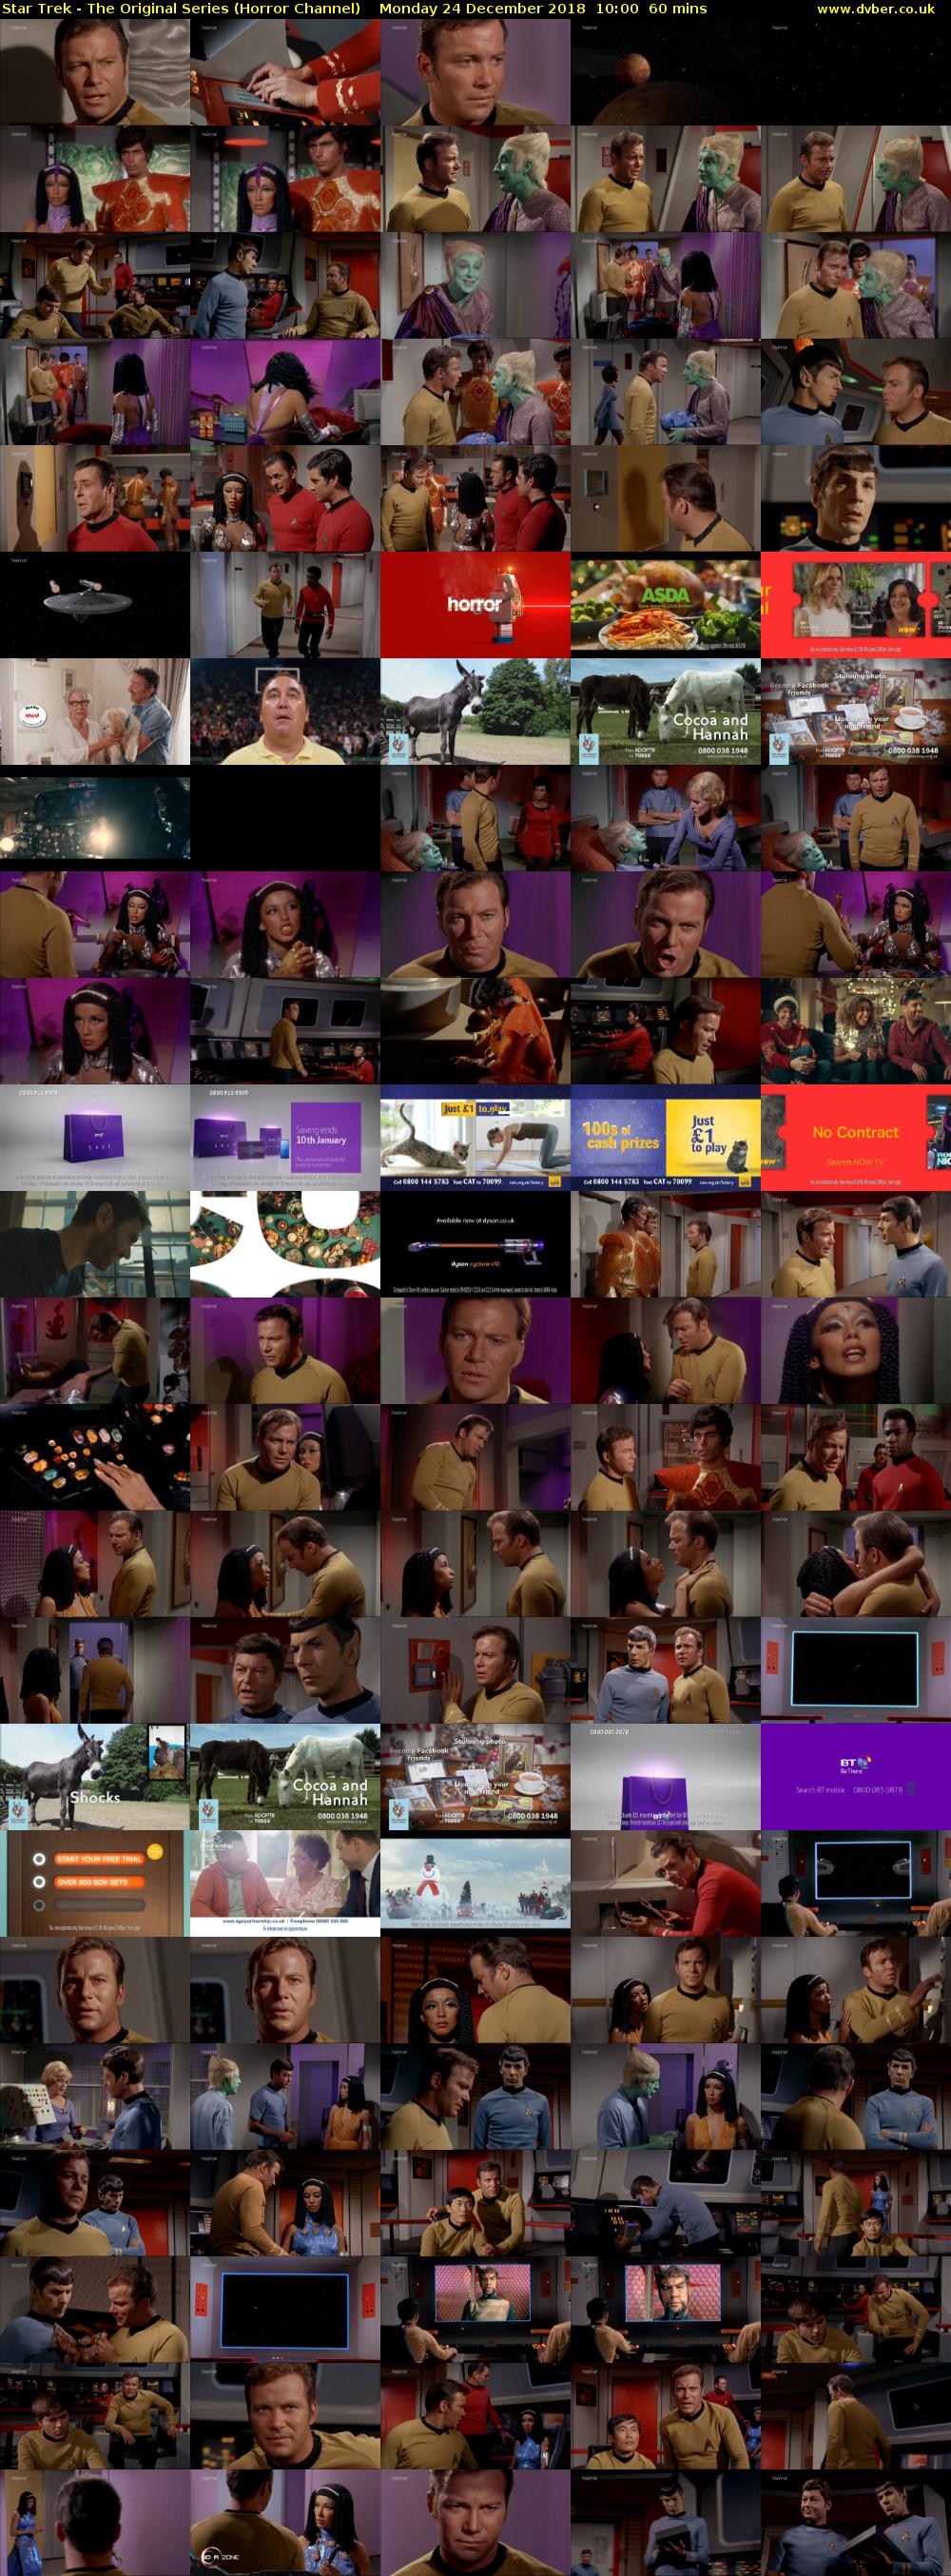 Star Trek - The Original Series (Horror Channel) Monday 24 December 2018 10:00 - 11:00